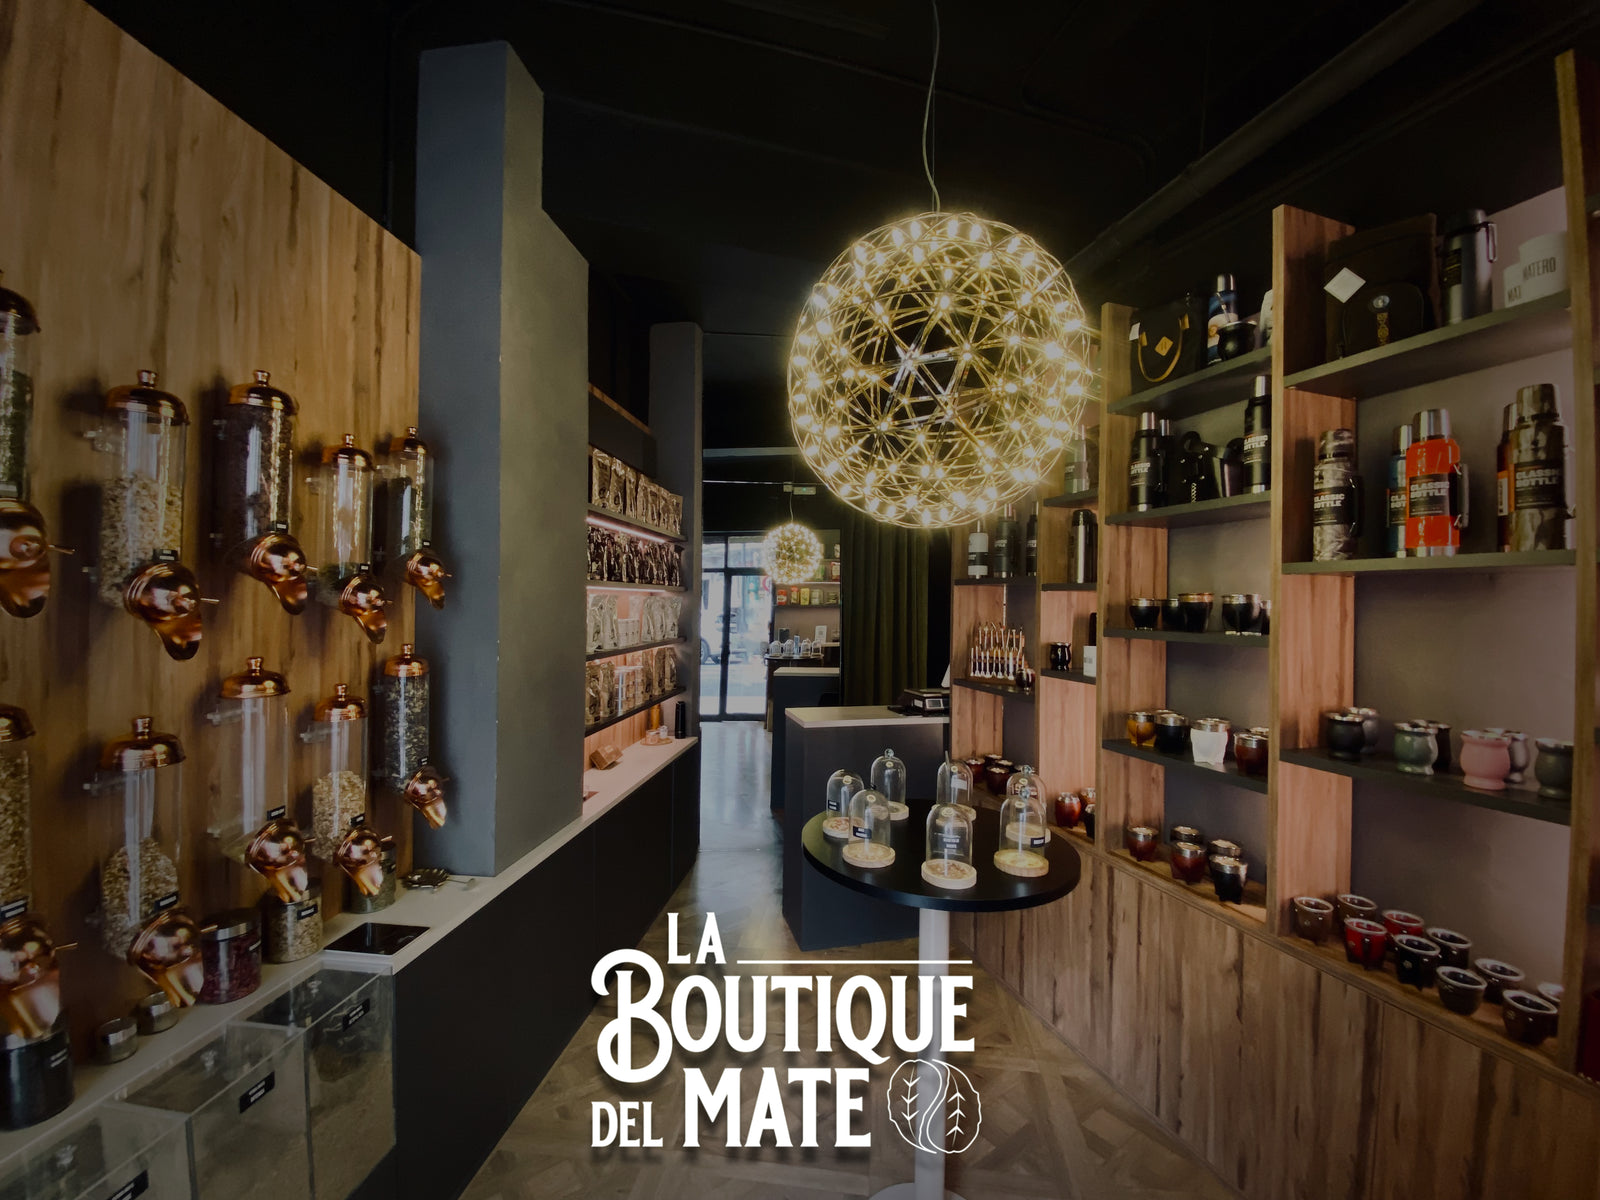 Equipo De Mate, Set De Mate, Kit Matero Completo-handmade Argentina 